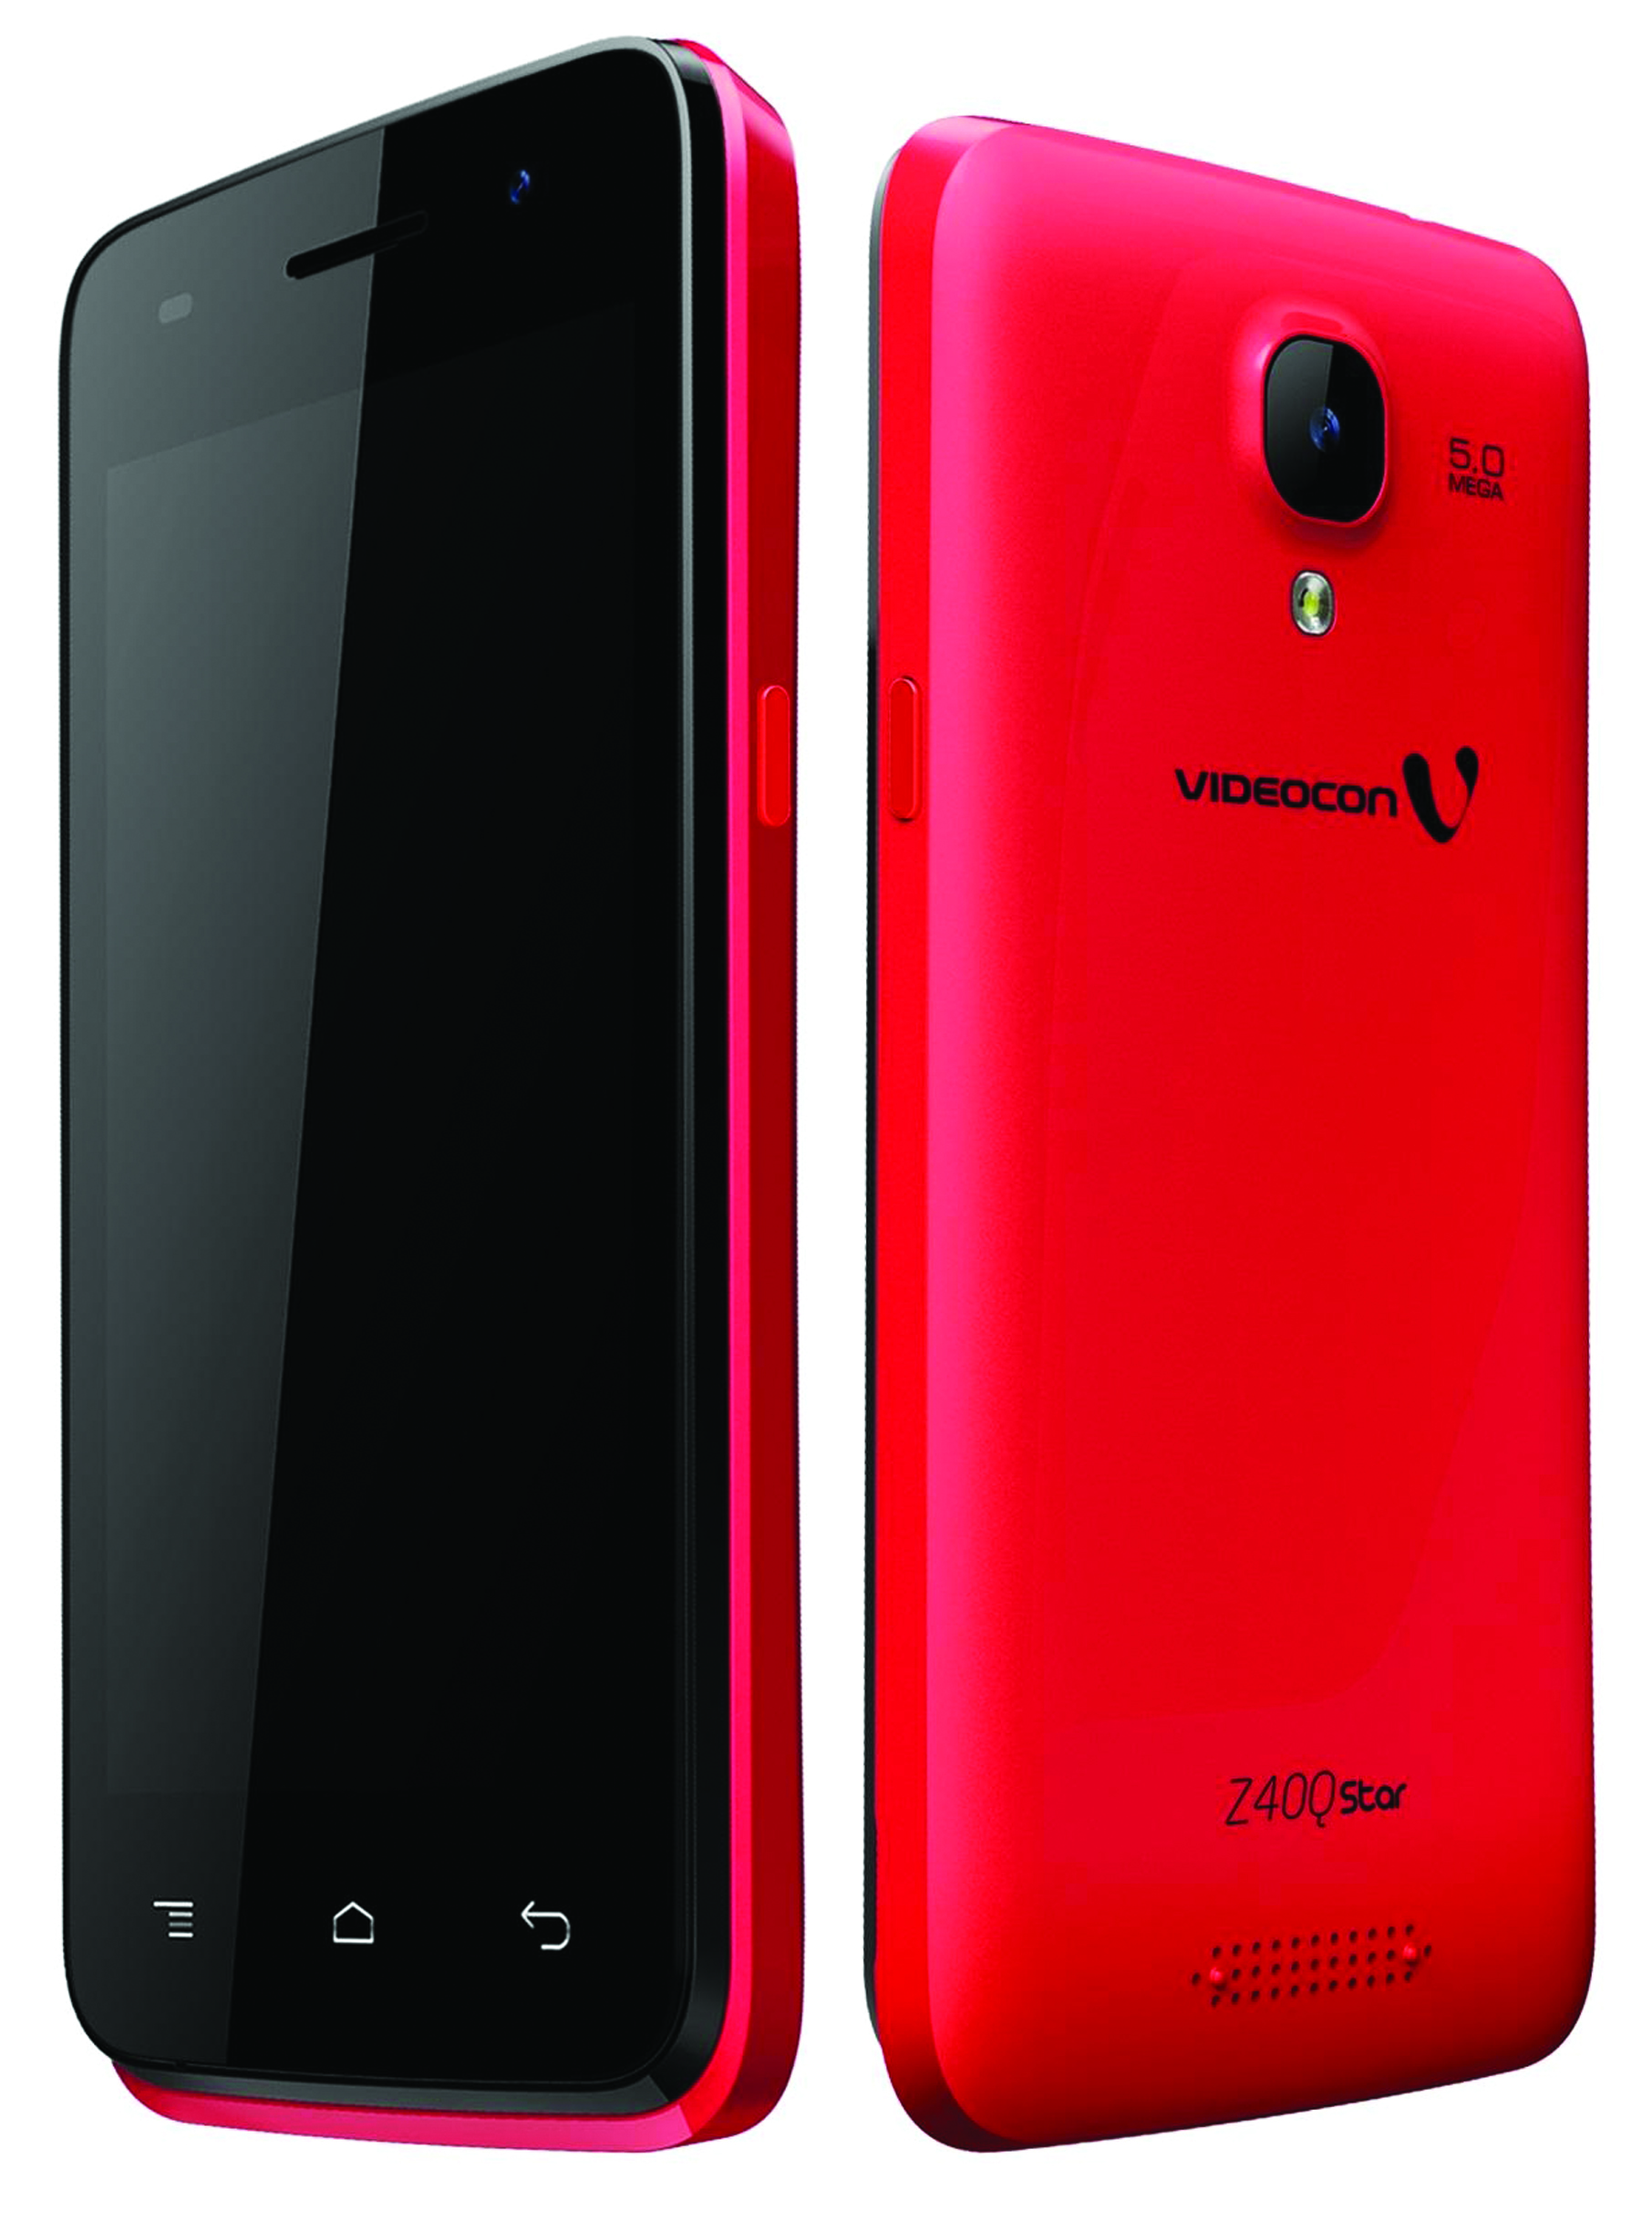 Videocon Mobile Phones brings Z40Q Star and Z50Q Star